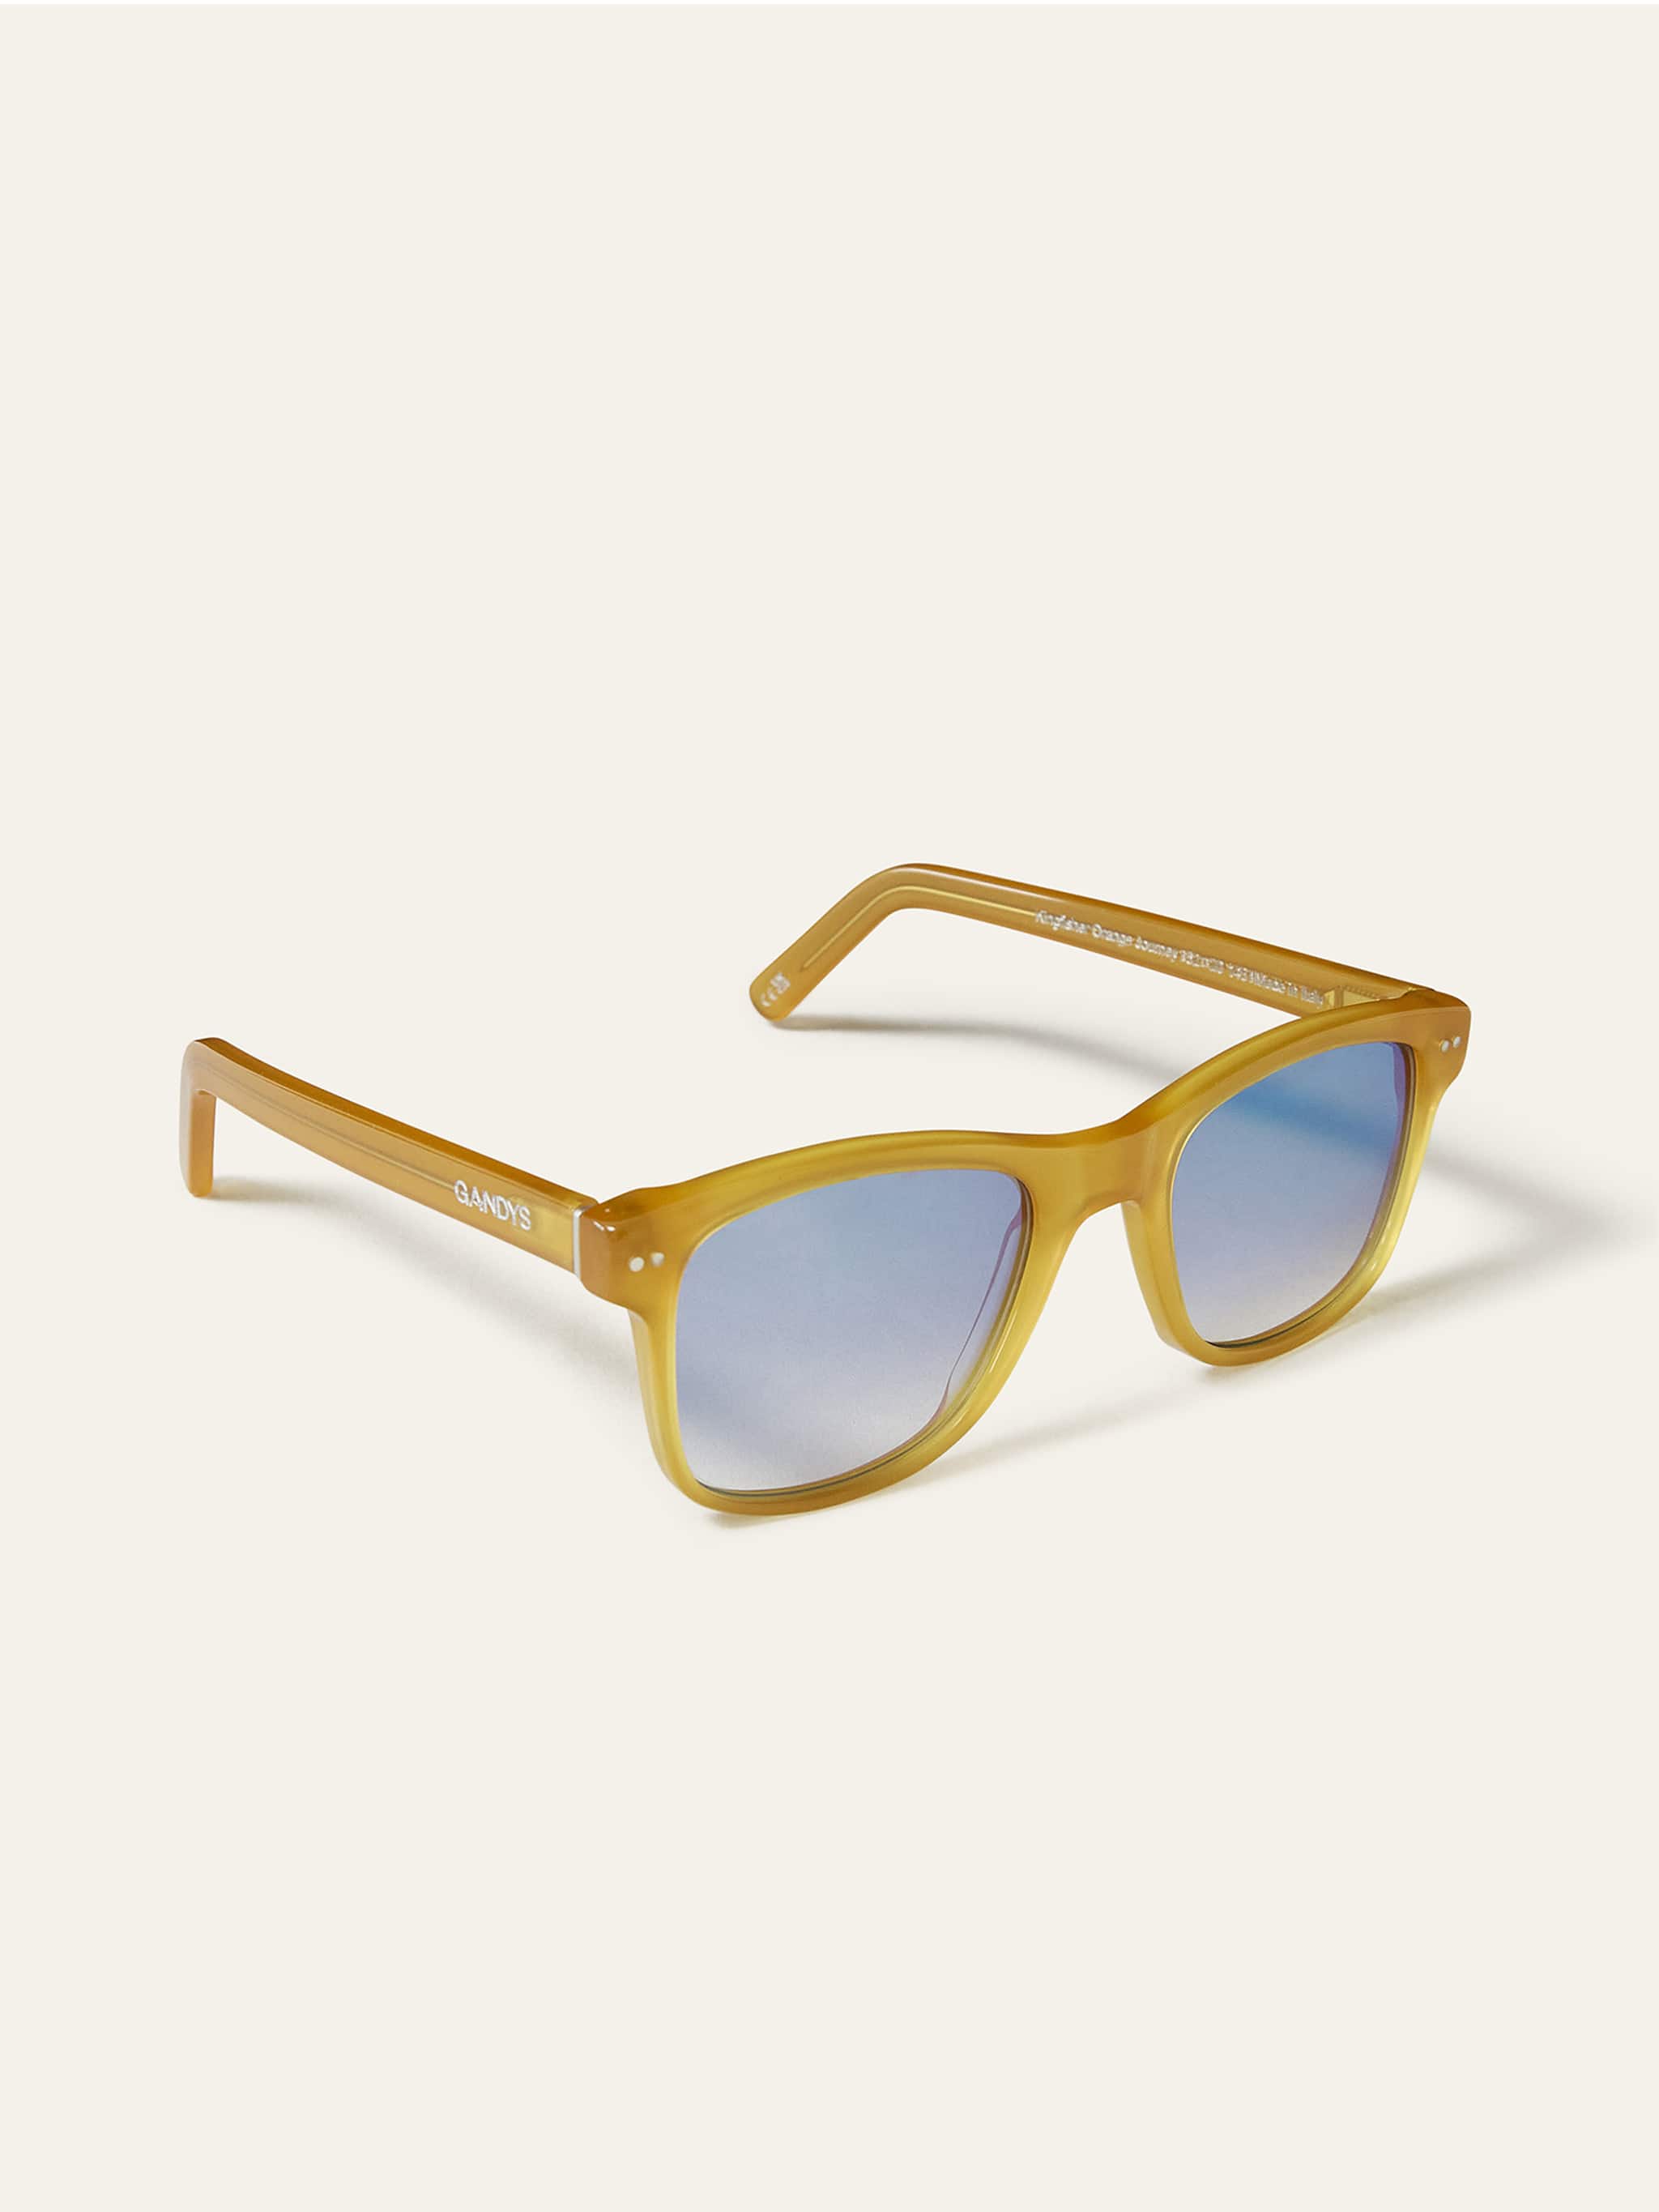 kingfisher-orange-sunglasses-790360.jpg